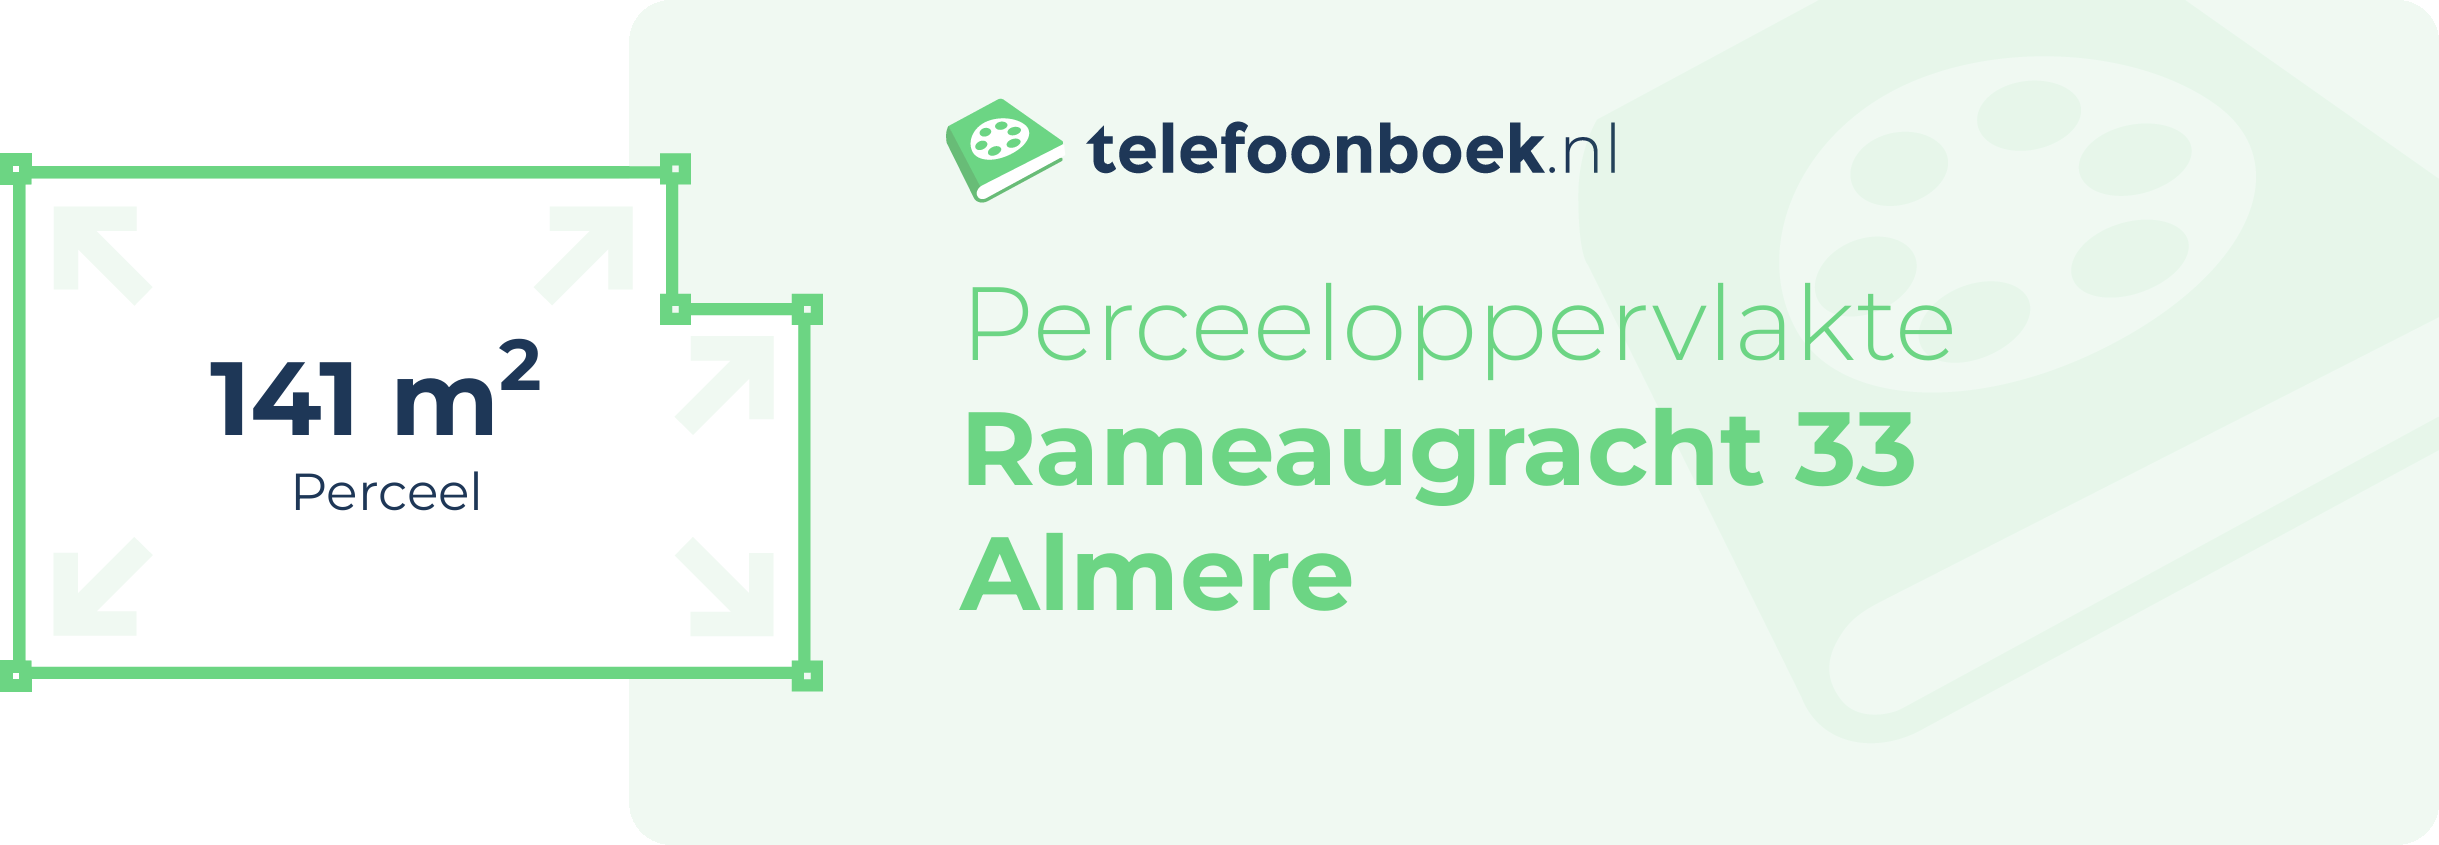 Perceeloppervlakte Rameaugracht 33 Almere